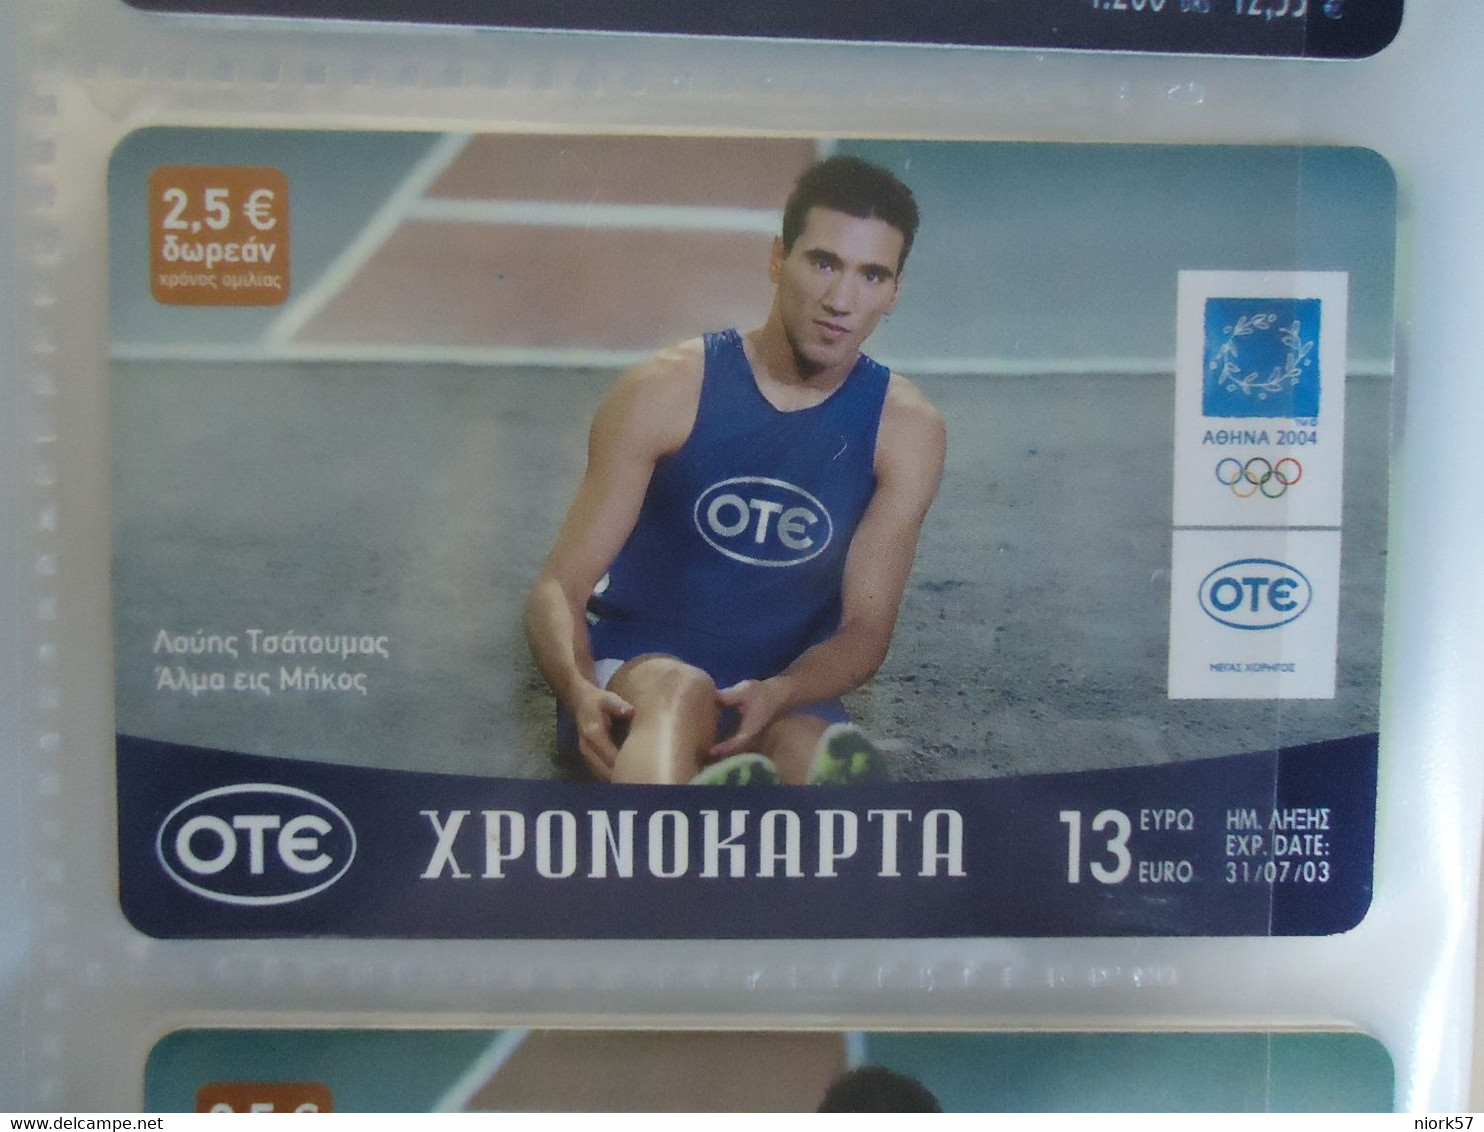 GREECE USED PREPAID CARDS  SPORT  EX DAT   07/02 - Olympische Spiele